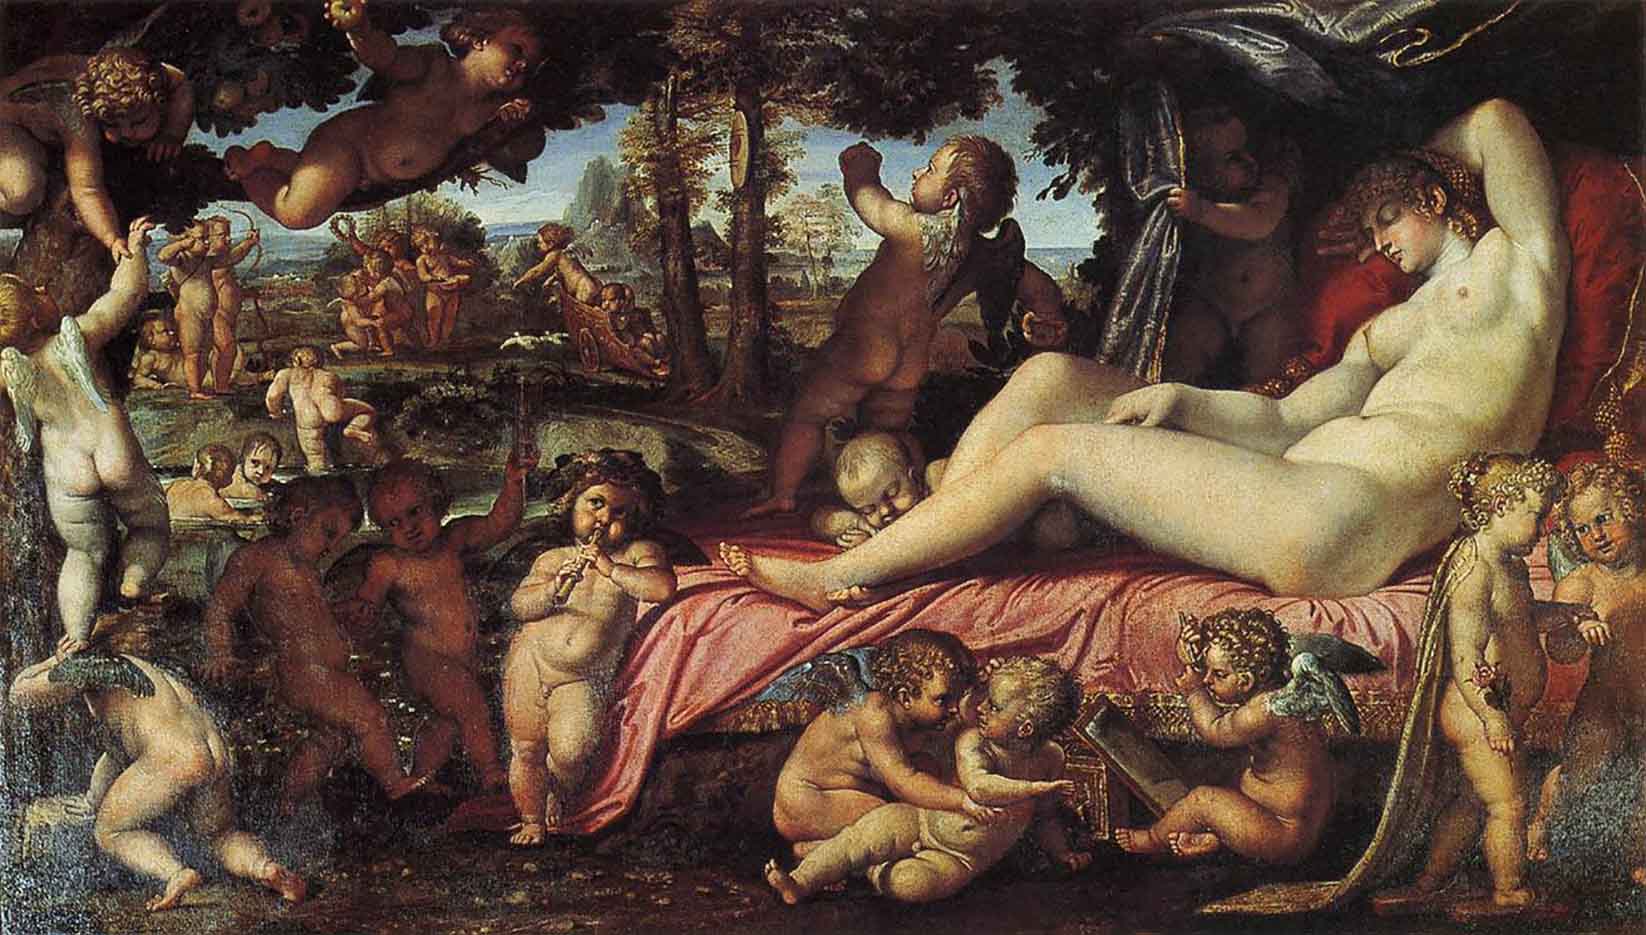 Аннибале Карраччи (Annibale Carracci) “Sleeping Venus“